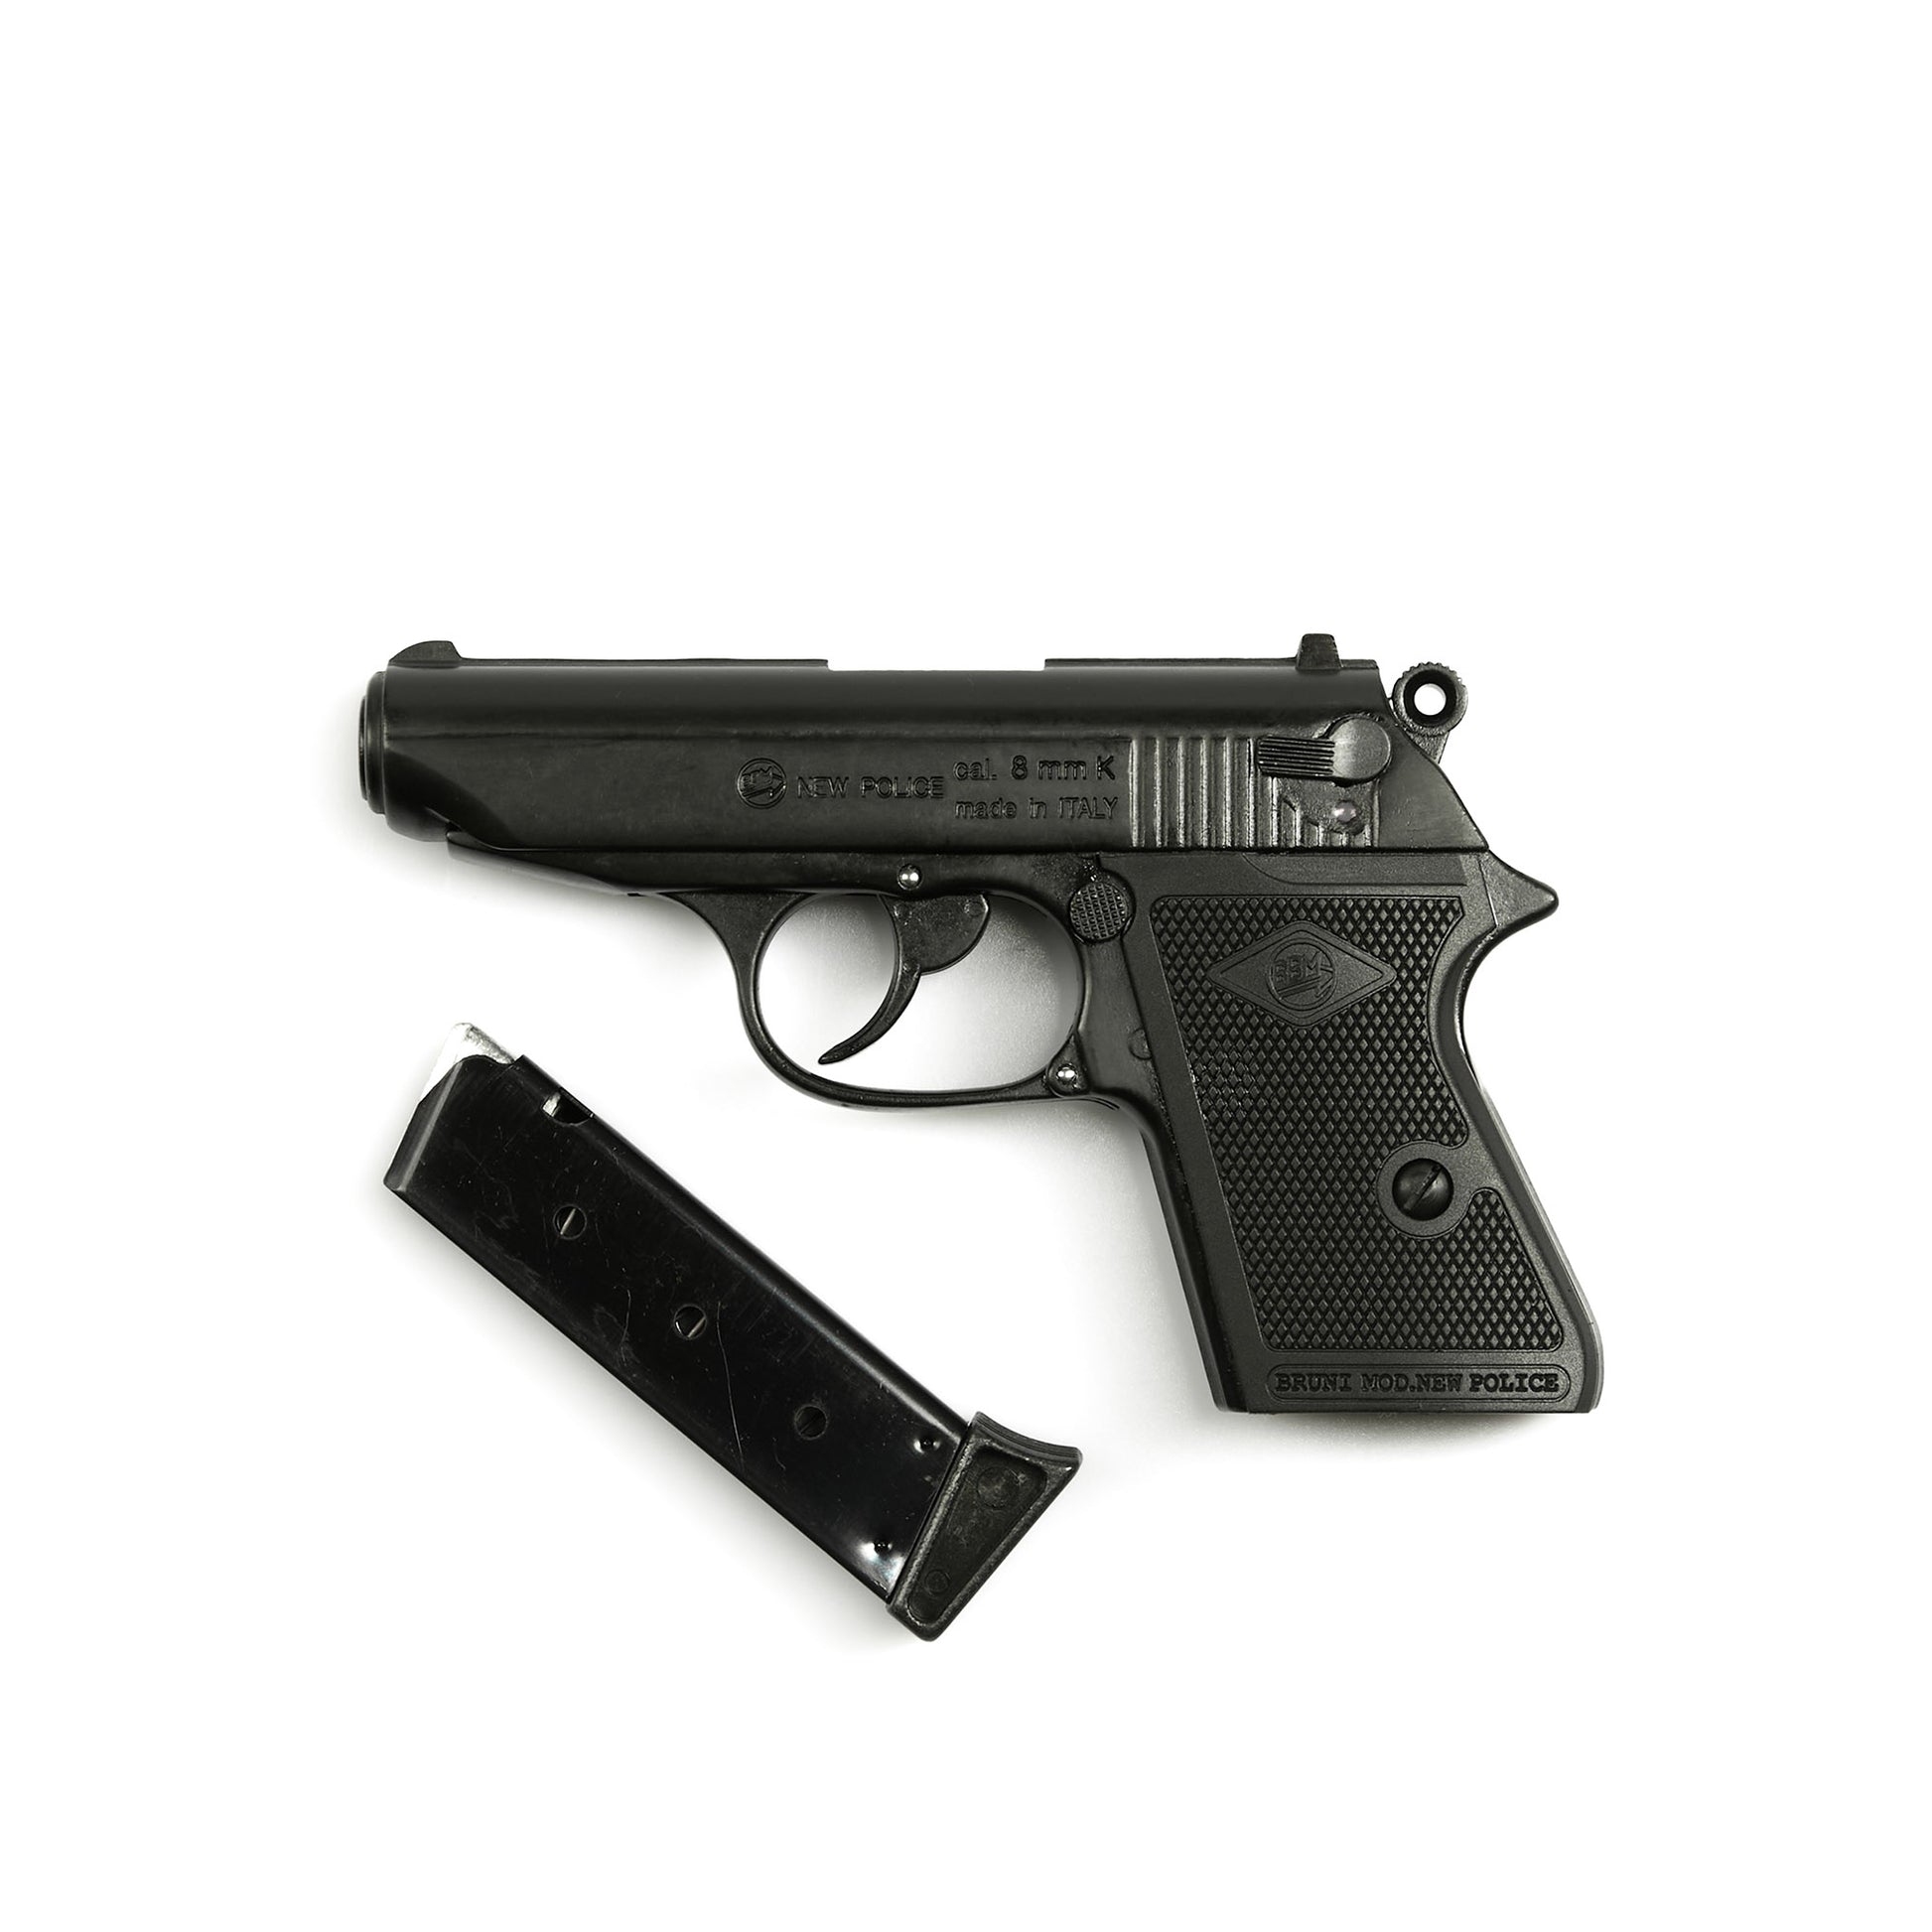 Replica James Bond Style Black 8MM Blank Firing Automatic Gun - Black Finish